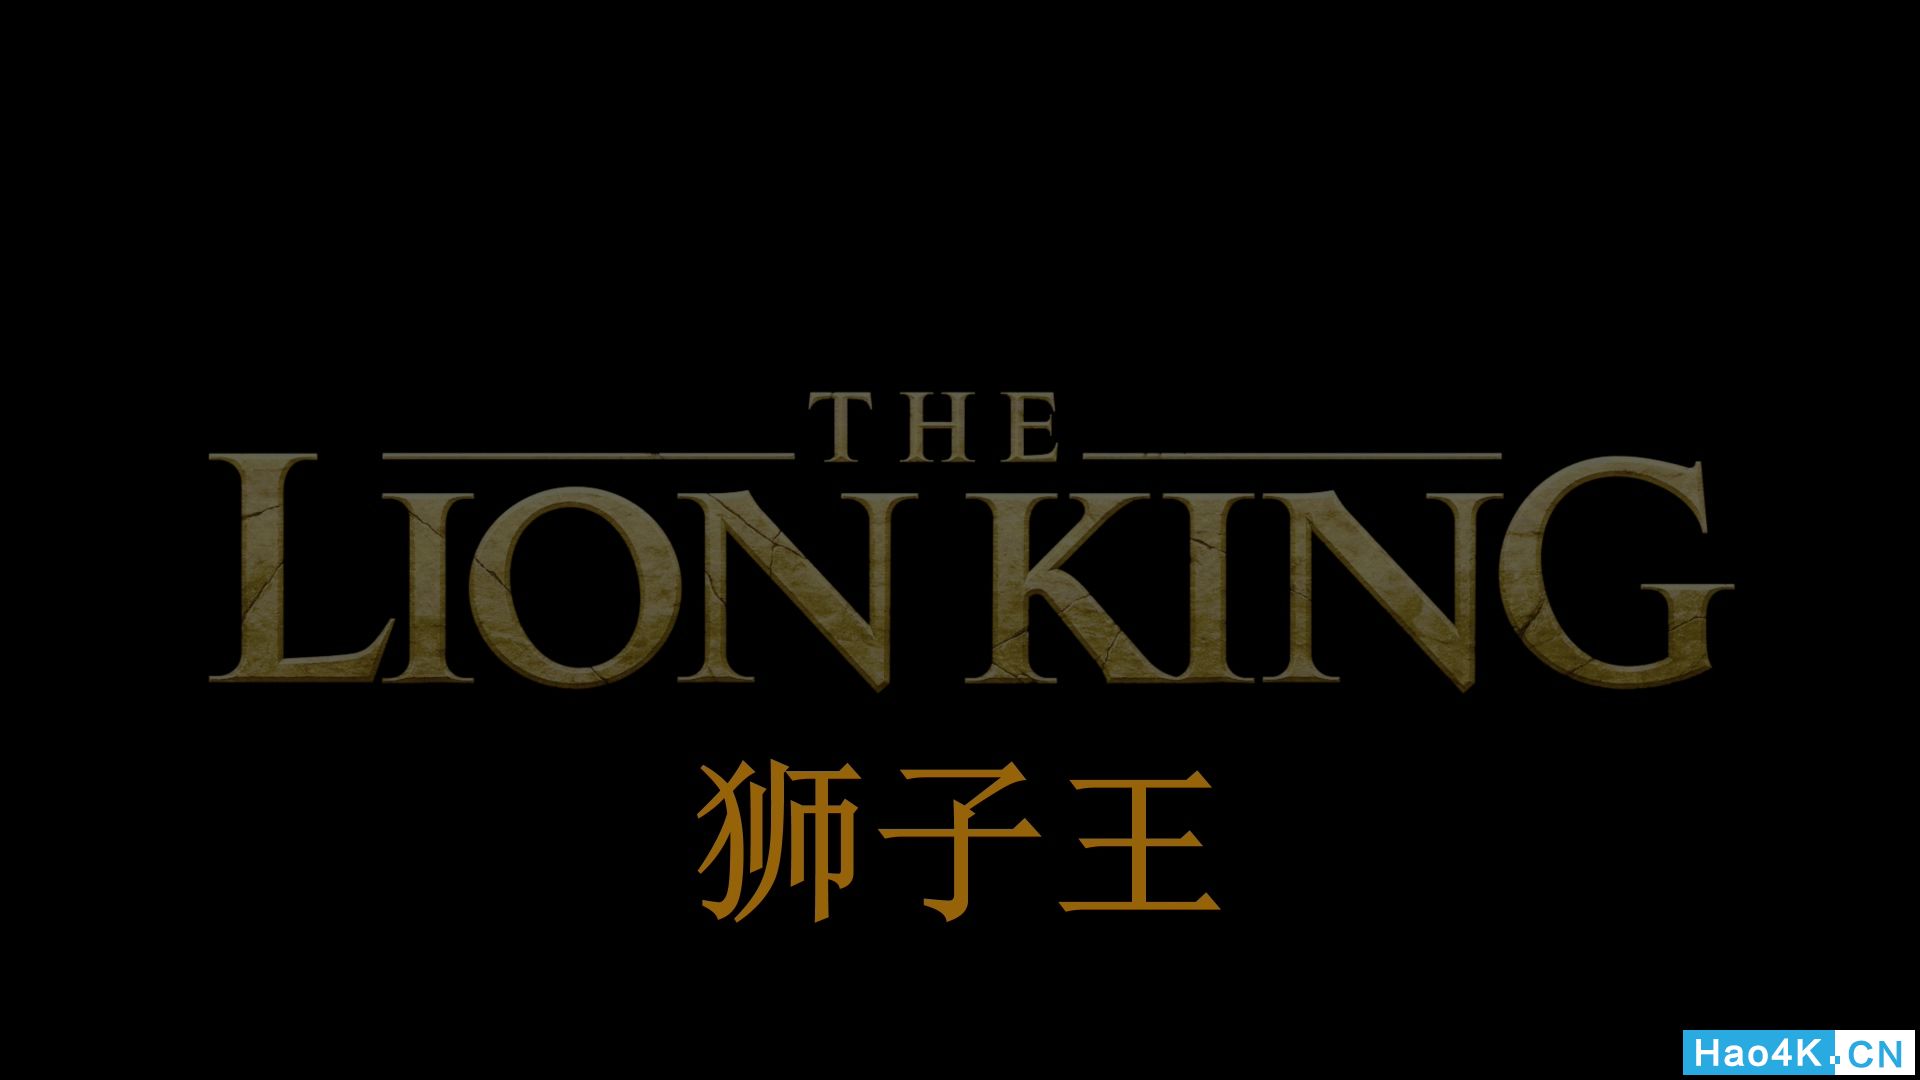 The.Lion.King.2019.2160p.BluRay.REMUX.HEVC.DTS-HD.MA.TrueHD.7.1-FGT.mkv_20191016.jpg